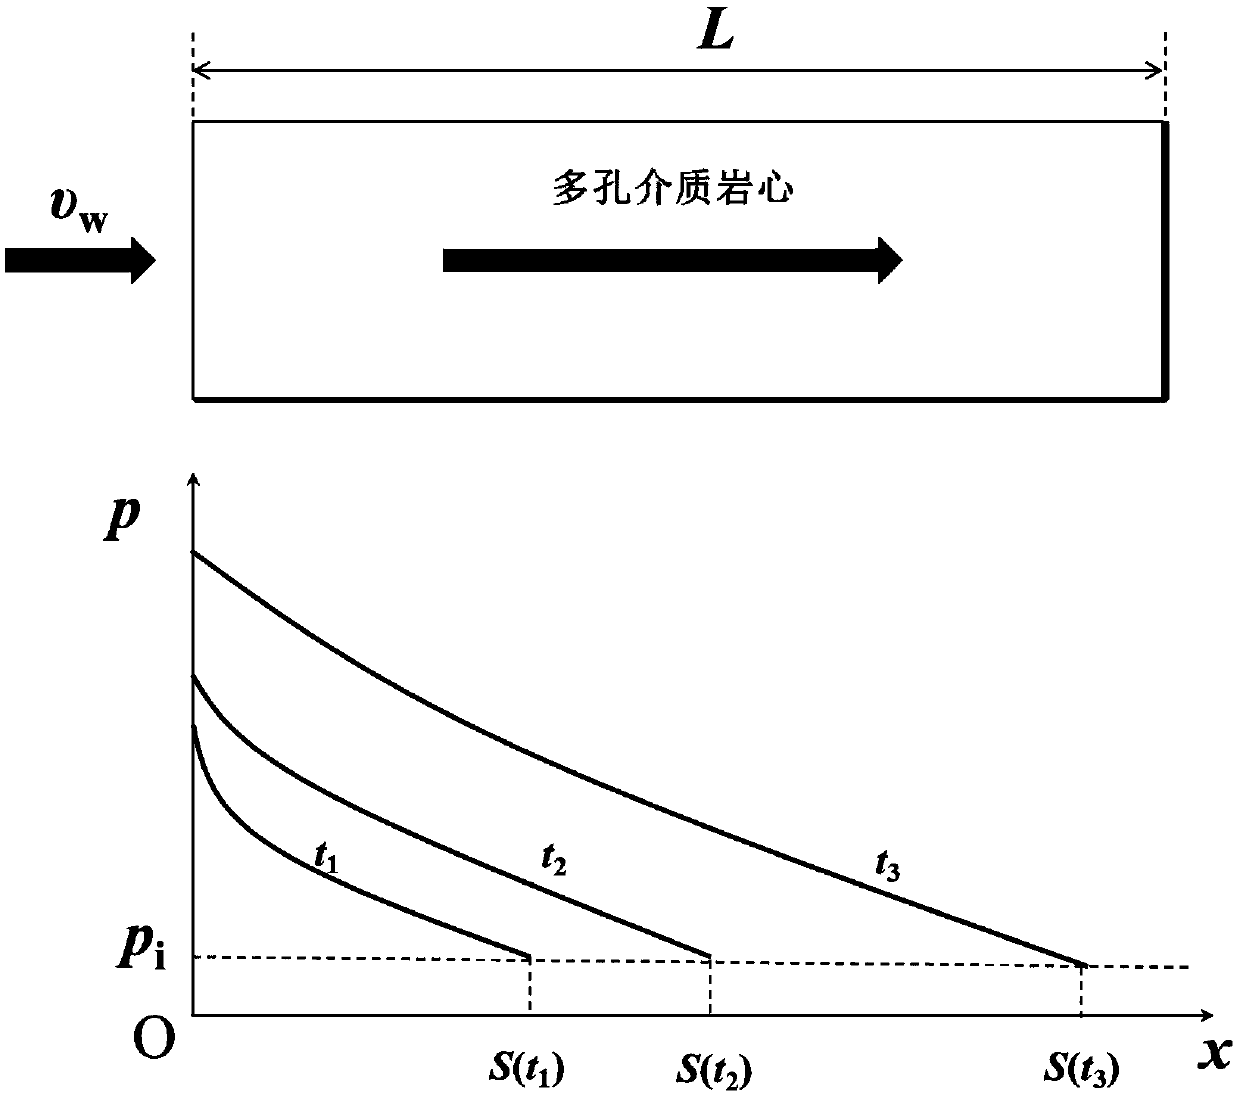 Experimental method for determining starting pressure gradient of seepage